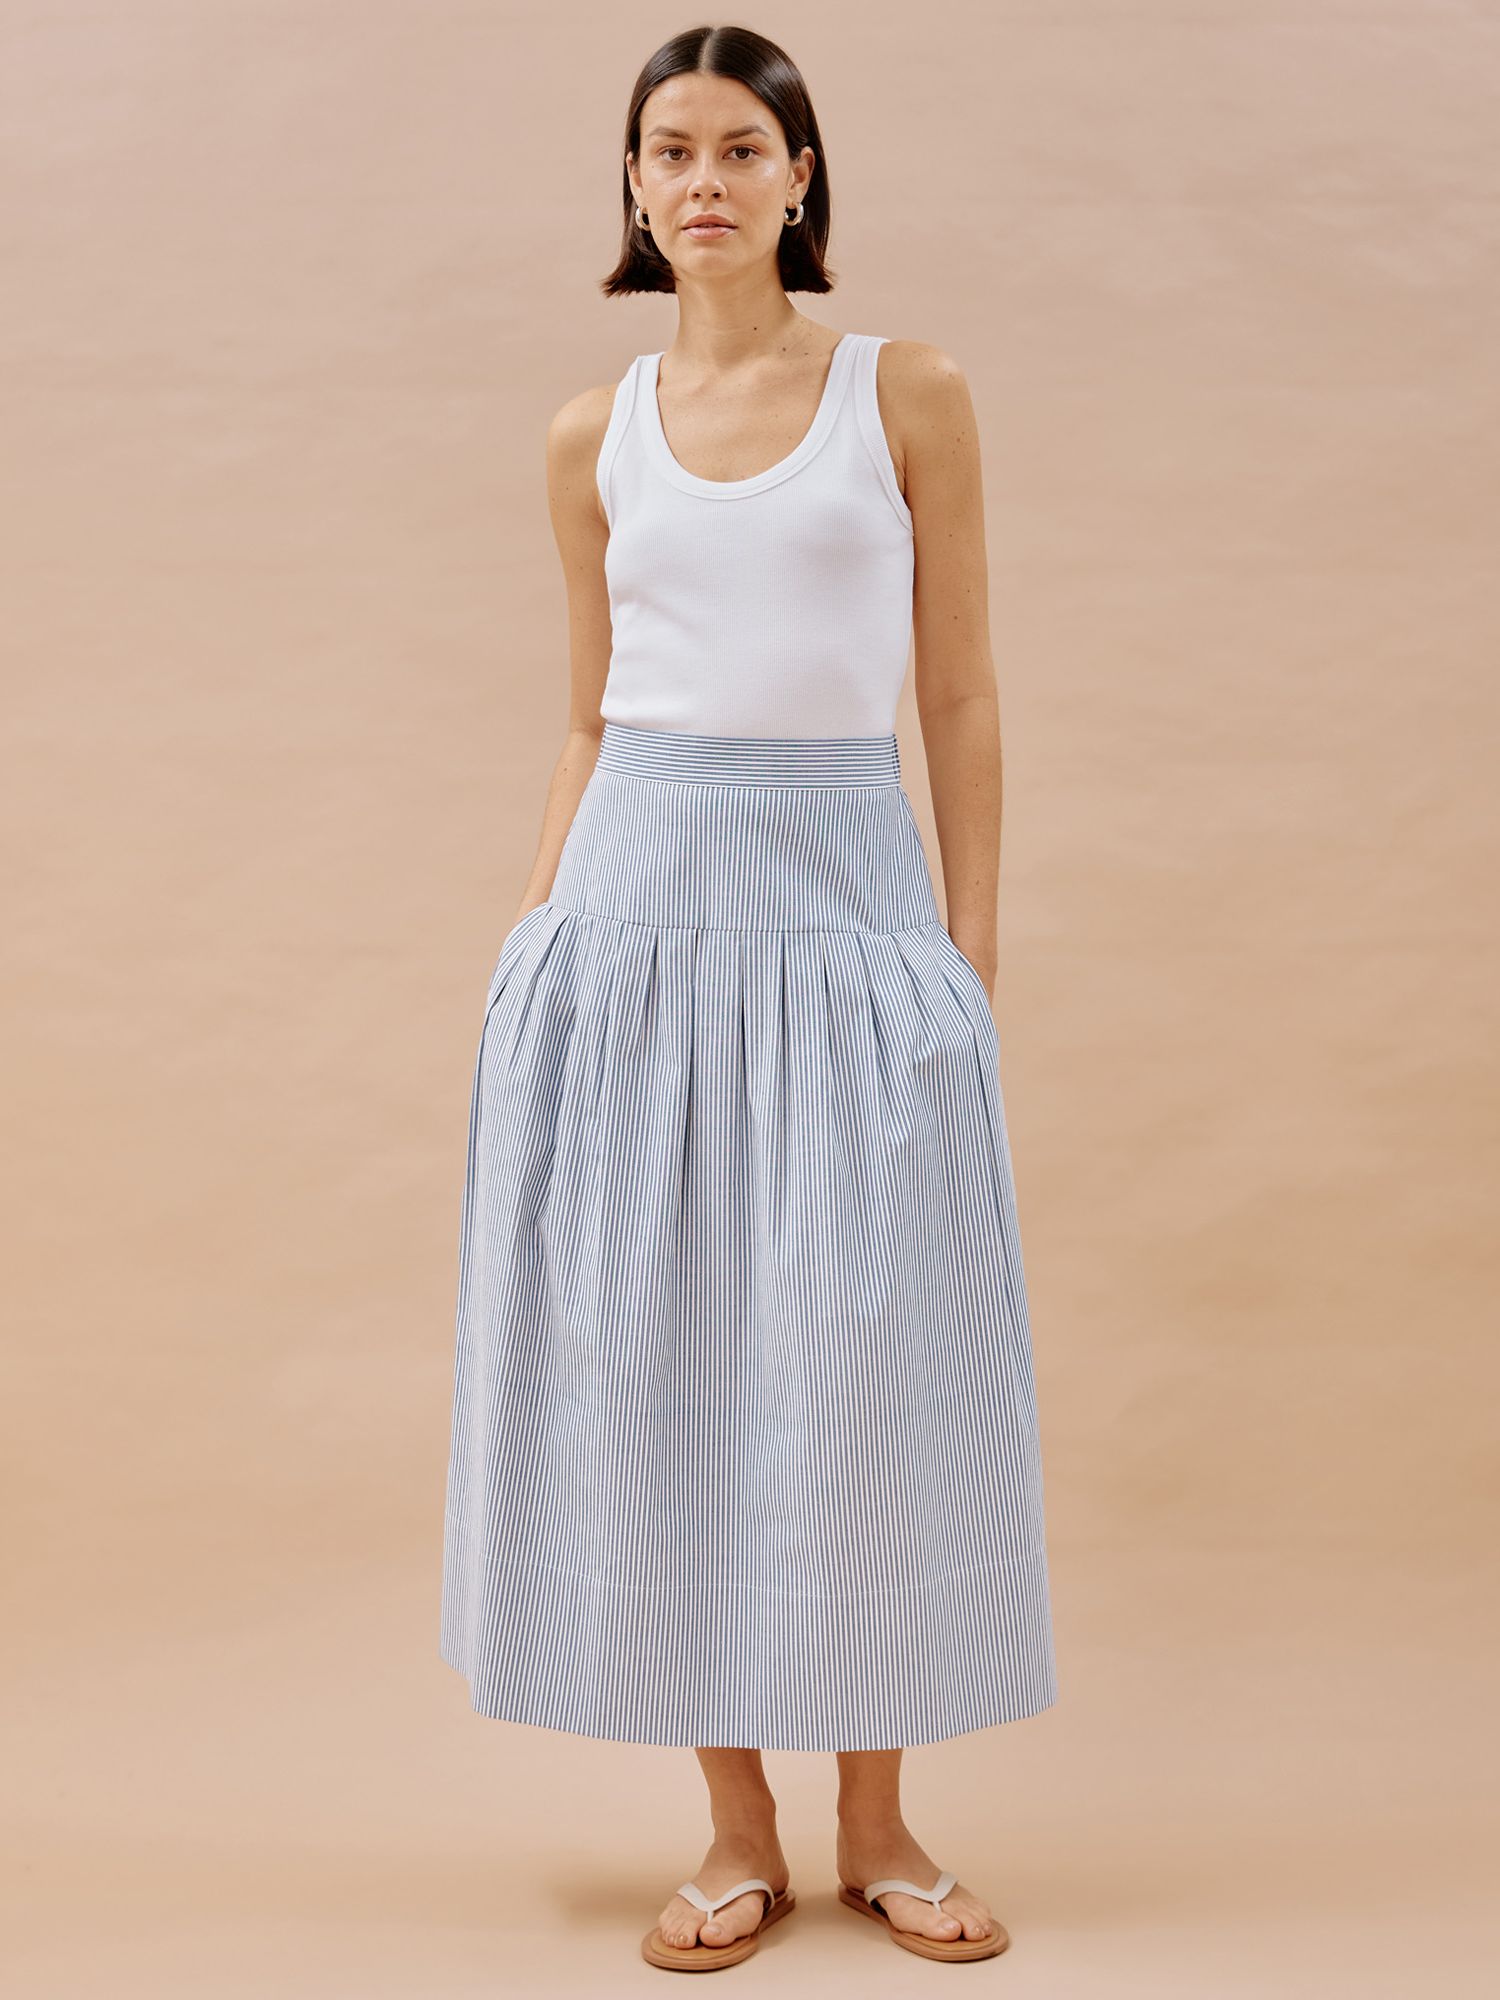 Buy Albaray Ticking Stripe Drop Waist Midi Skirt, Blue/White Online at johnlewis.com